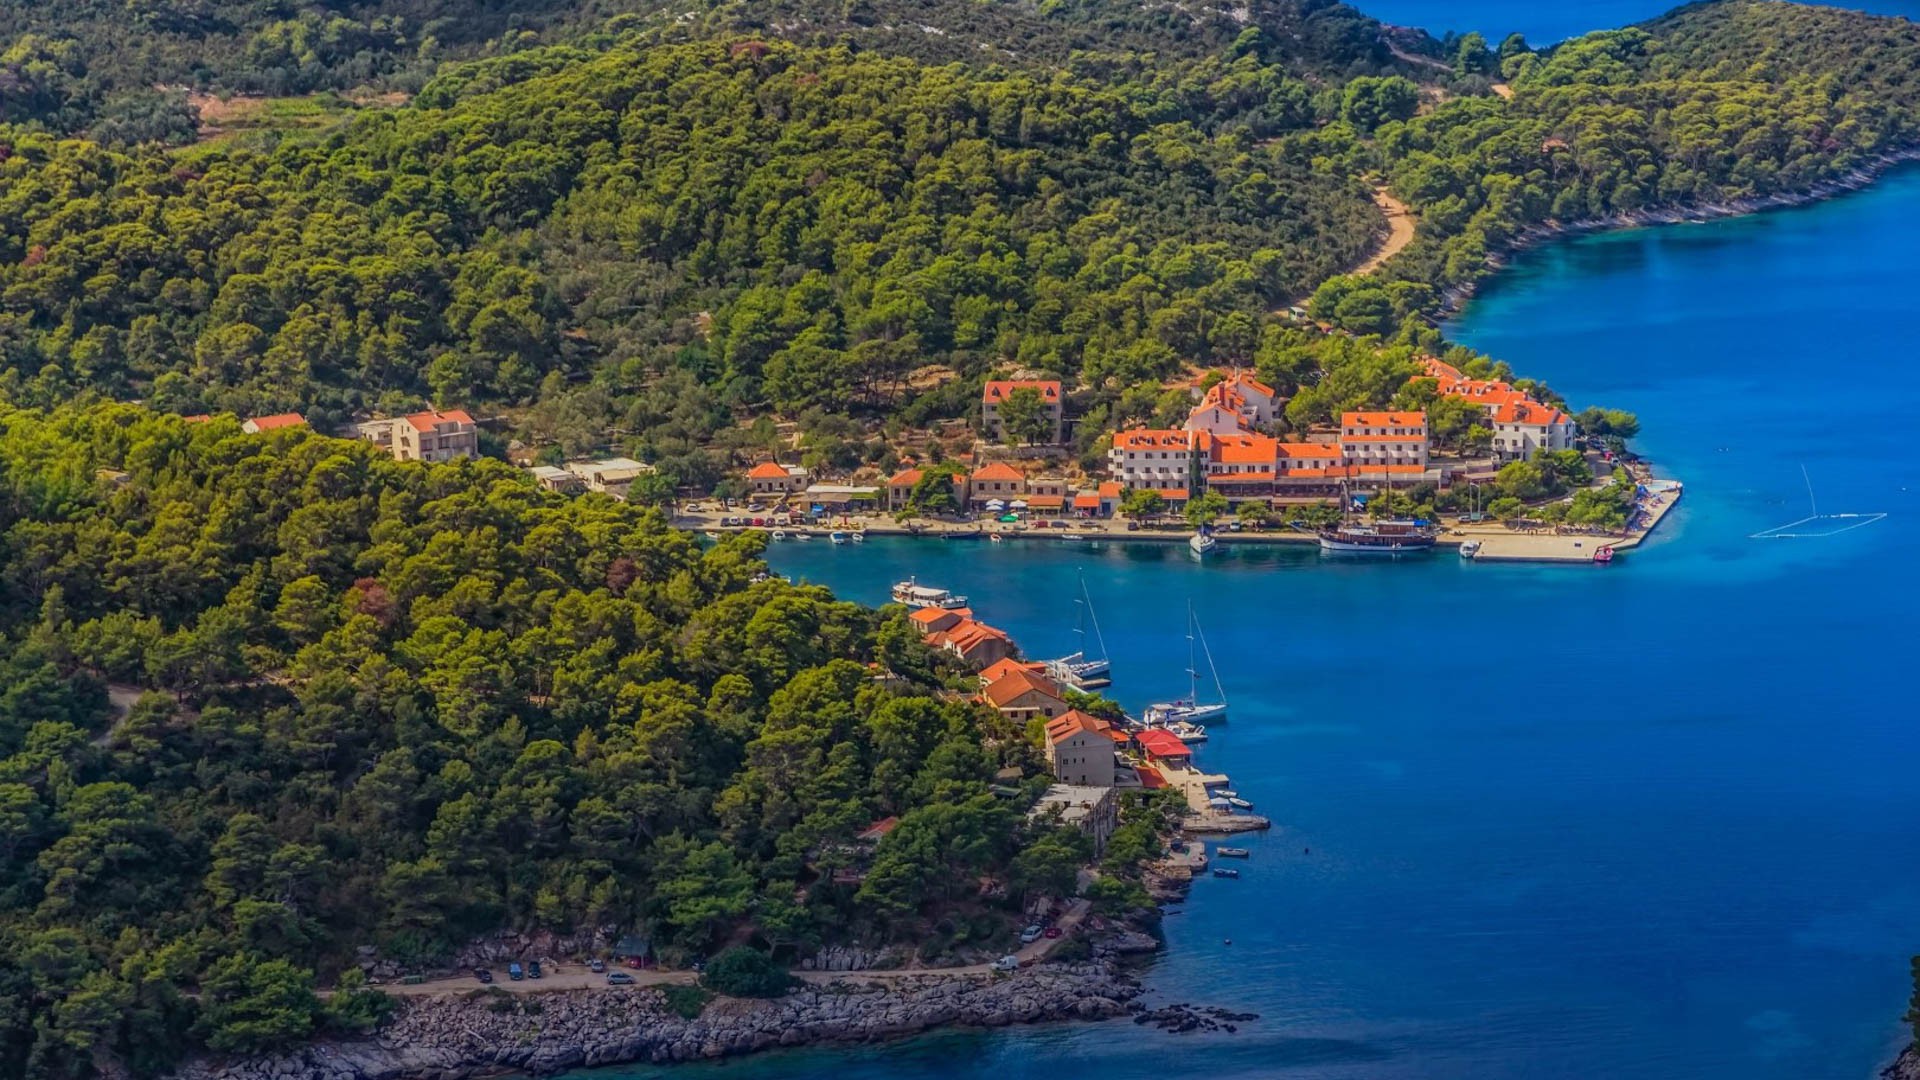 Pomena (Mljet Island) - Adriatic Sea | Croatia Cruise Croatia Cruise